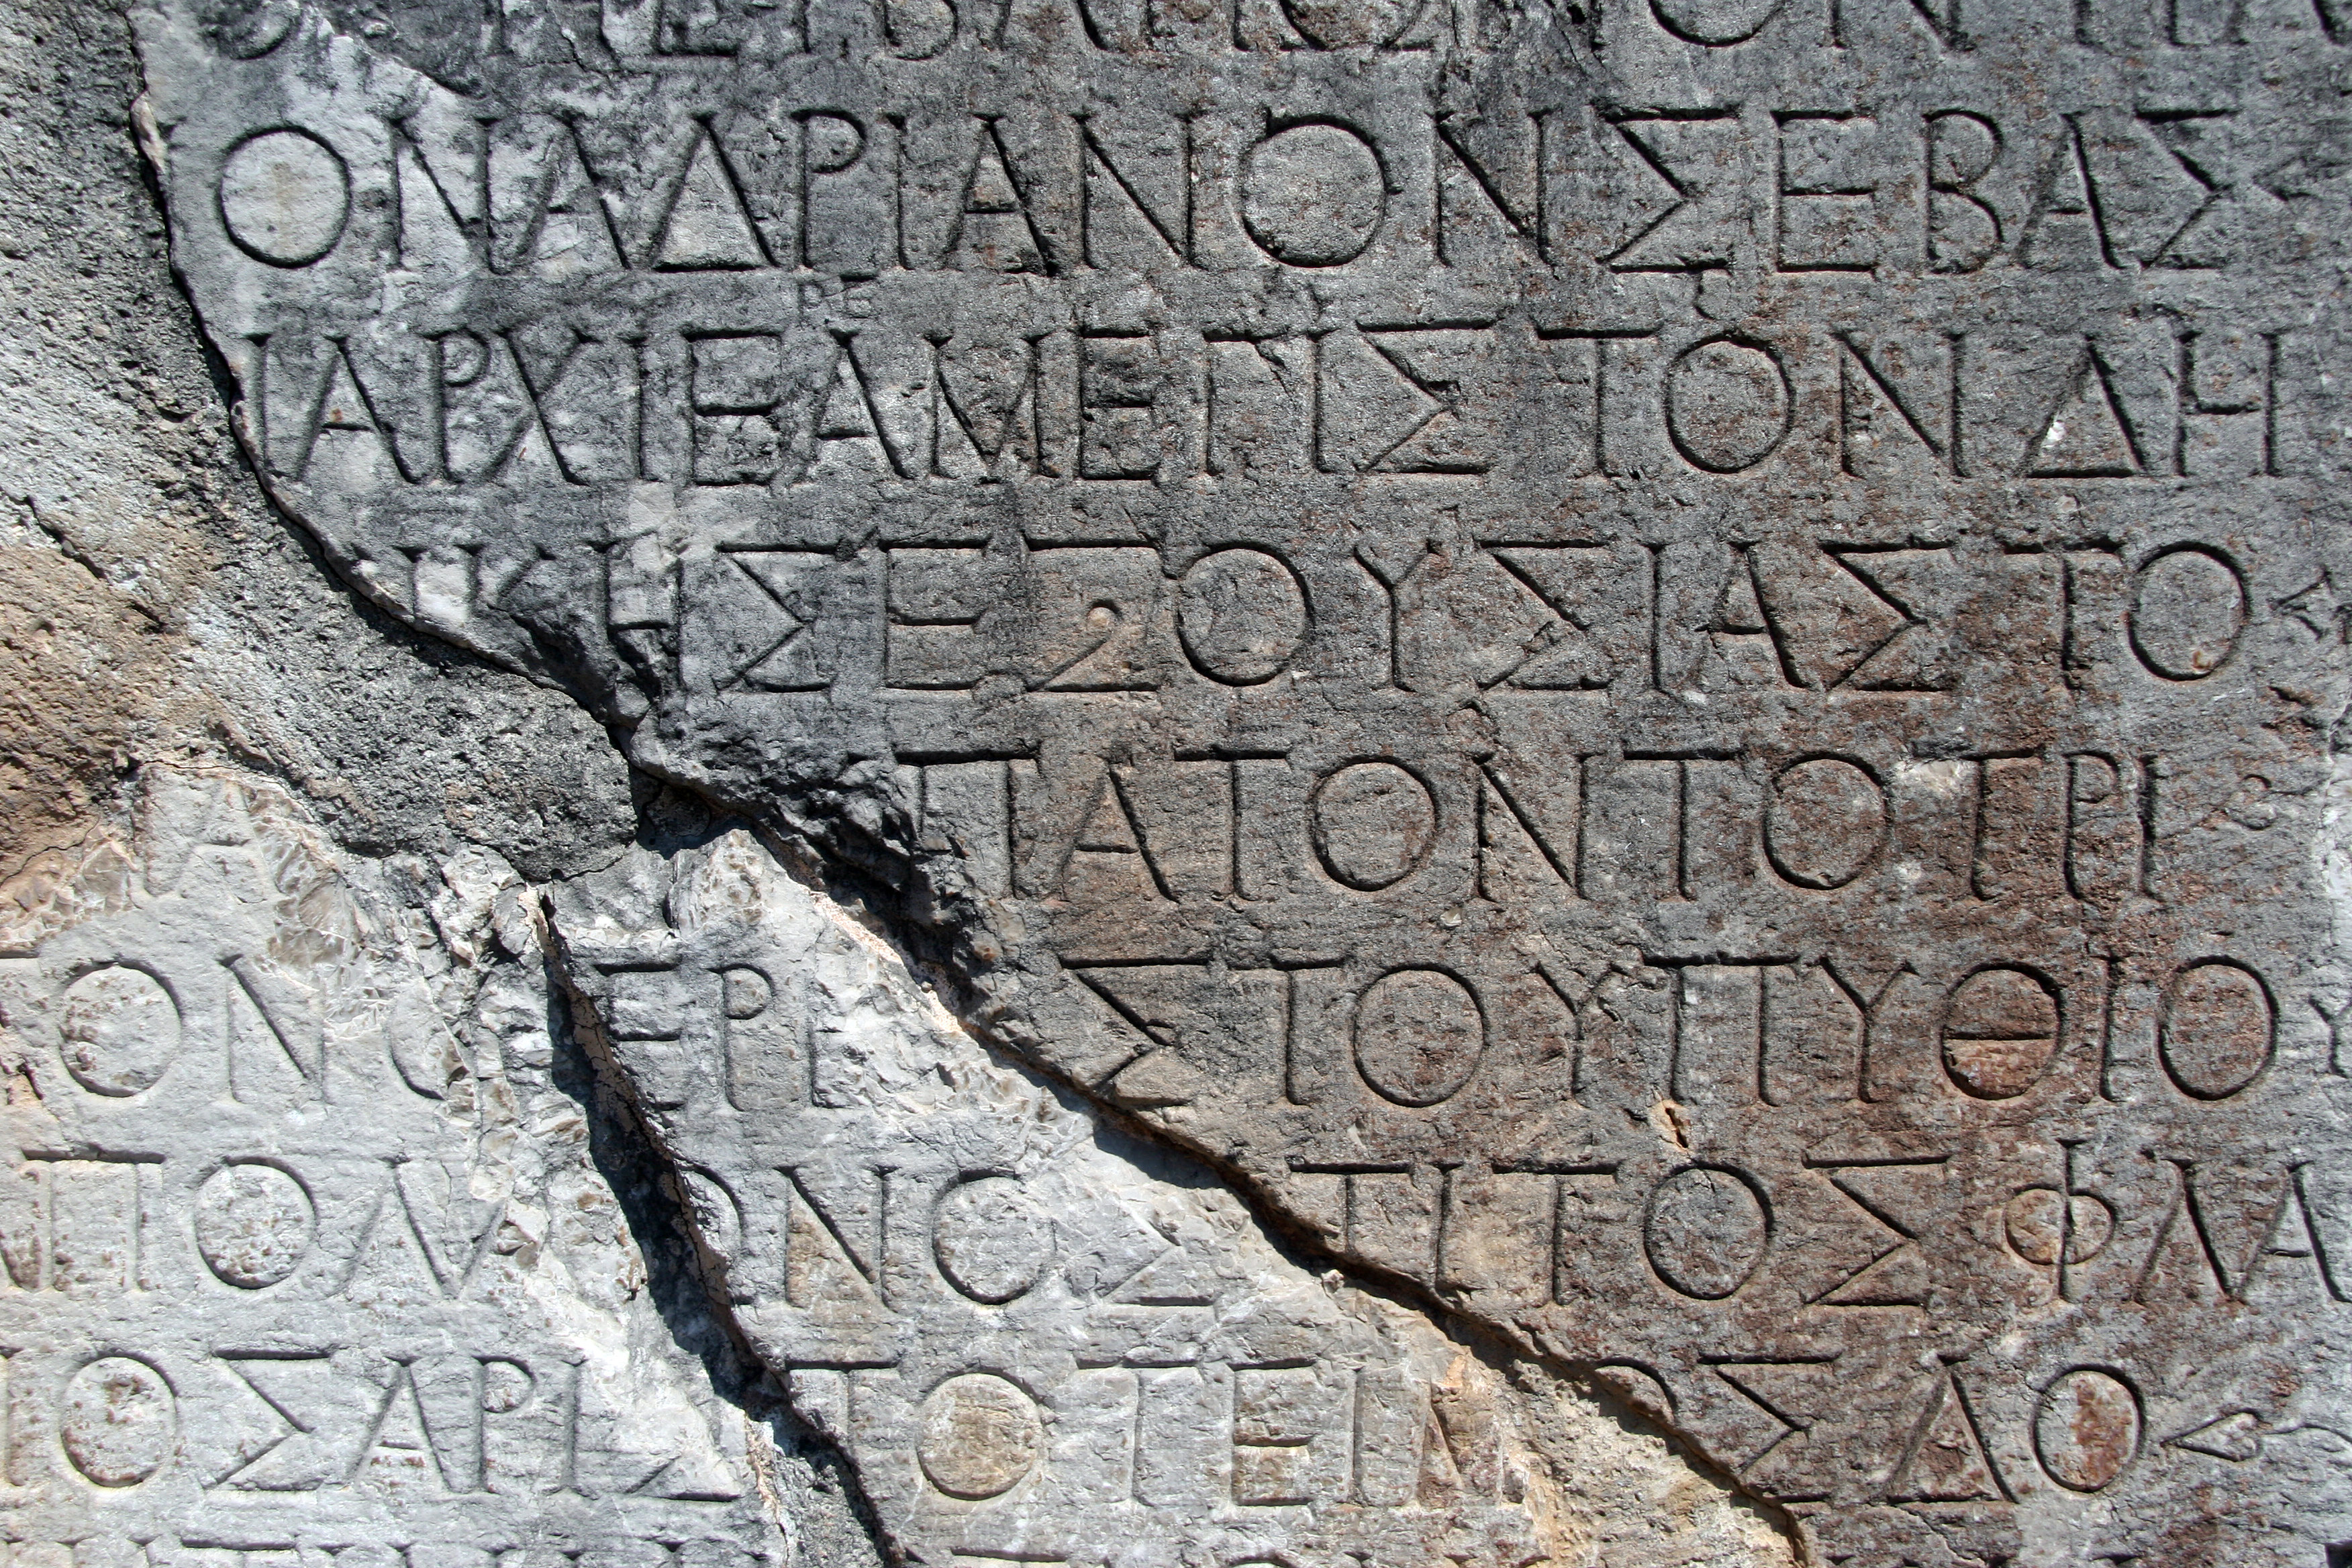 Greek - hardest language to learn